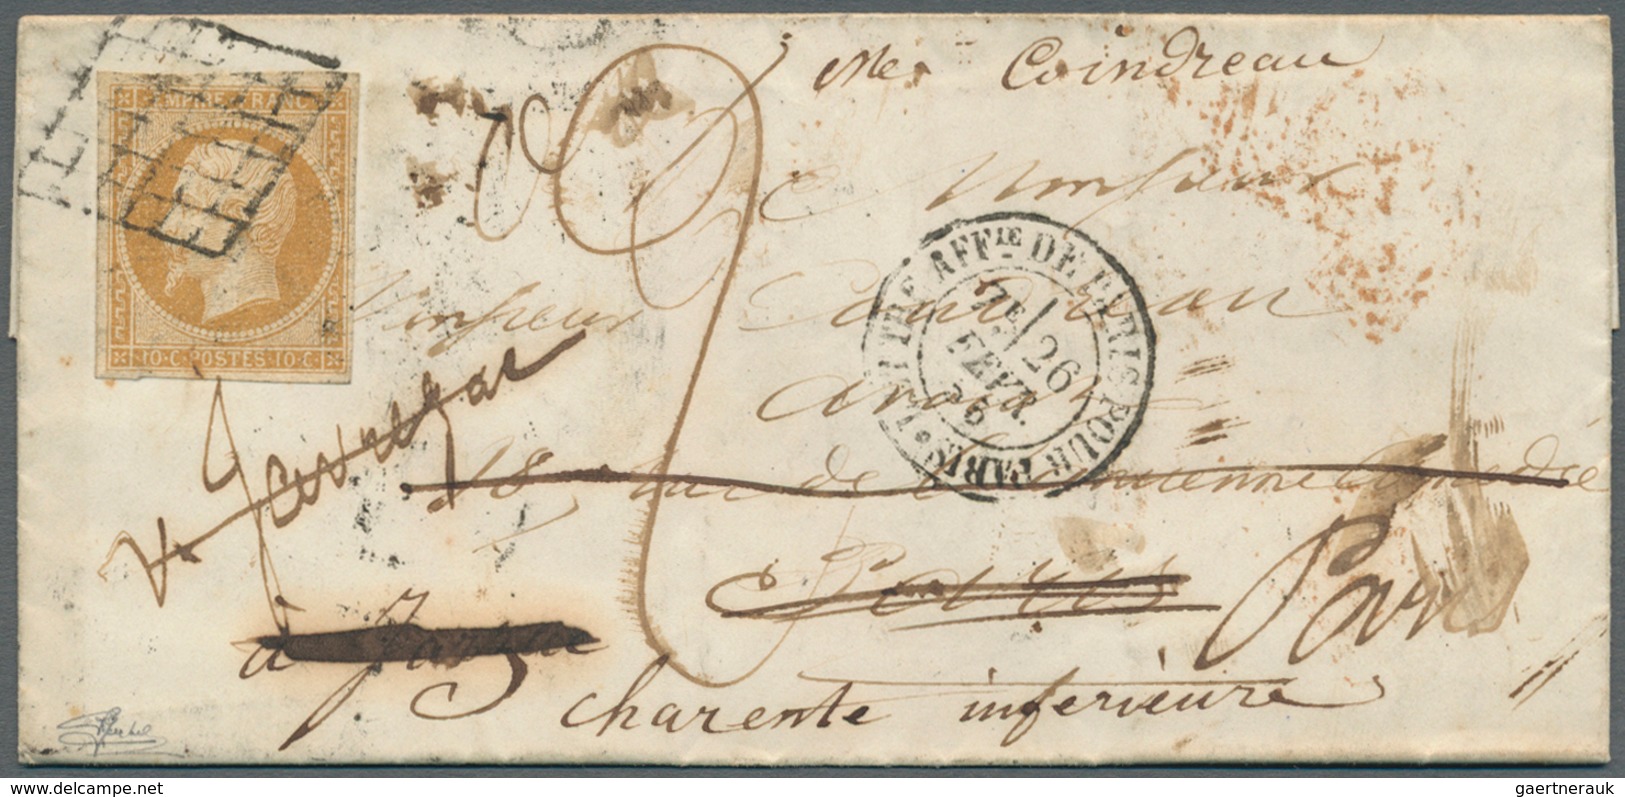 13590 Frankreich: 1855, 10c. Bistre "Empire Nd", Single Franking (tiny Imperfections - Irrelevant) On Loca - Gebraucht